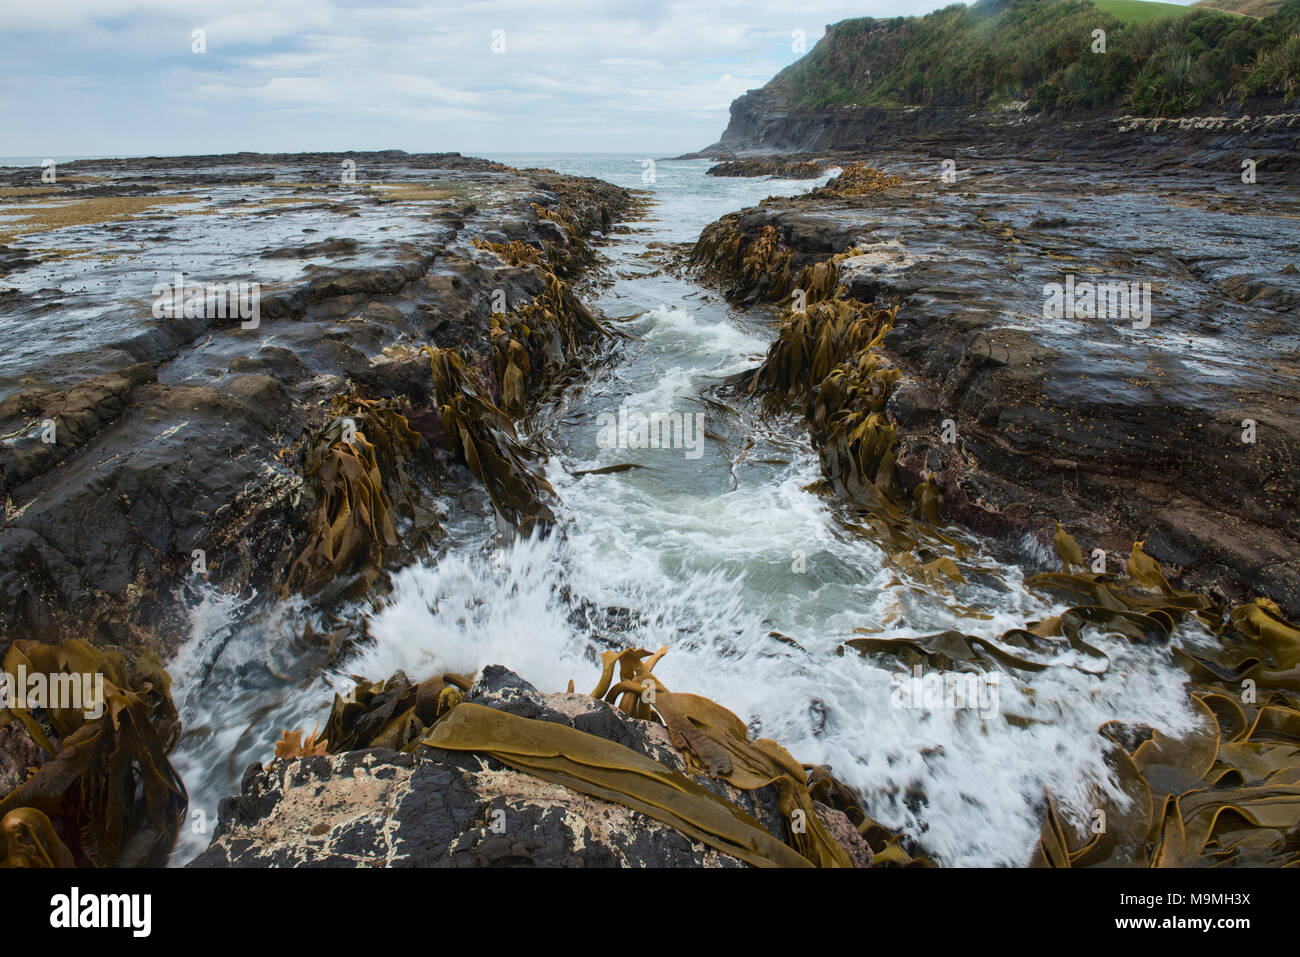 Respiro Oceano Meridionale scenario della baia di curiosita', il Catlins, Nuova Zelanda Foto Stock